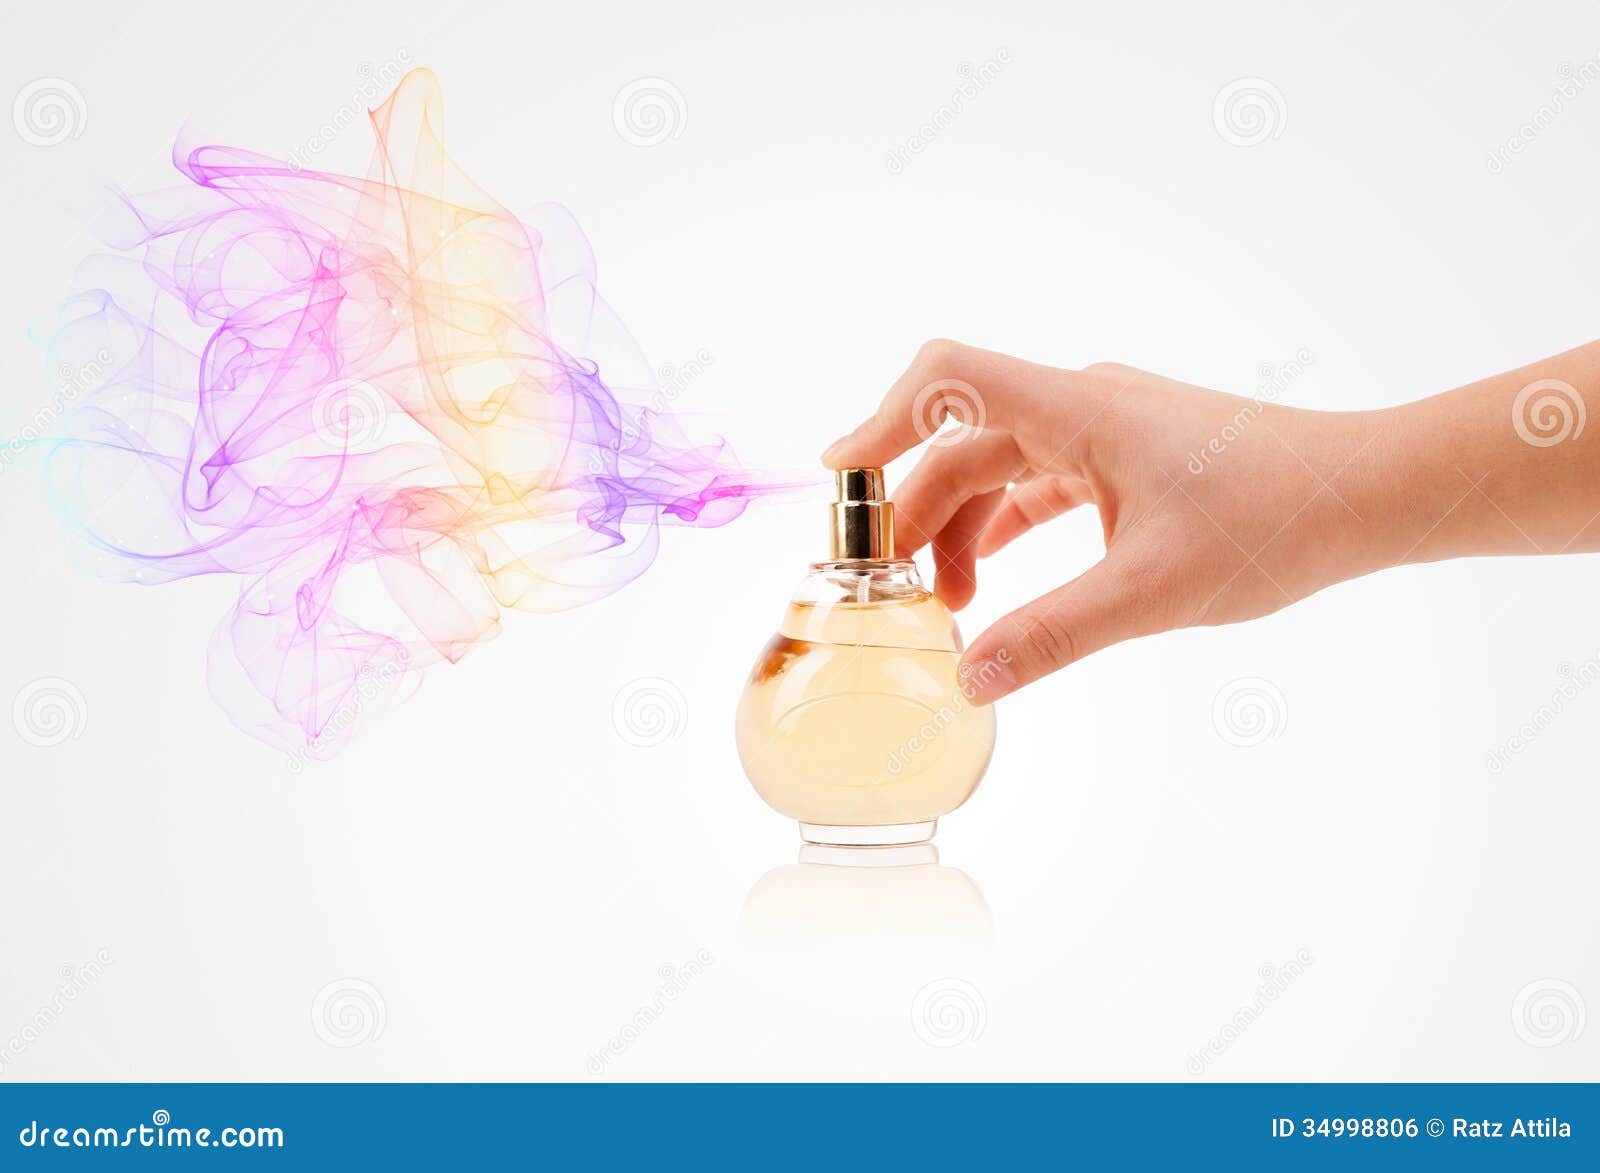 Woman Hands Spraying Perfume Royalty Free Stock Image - Image: 34998806